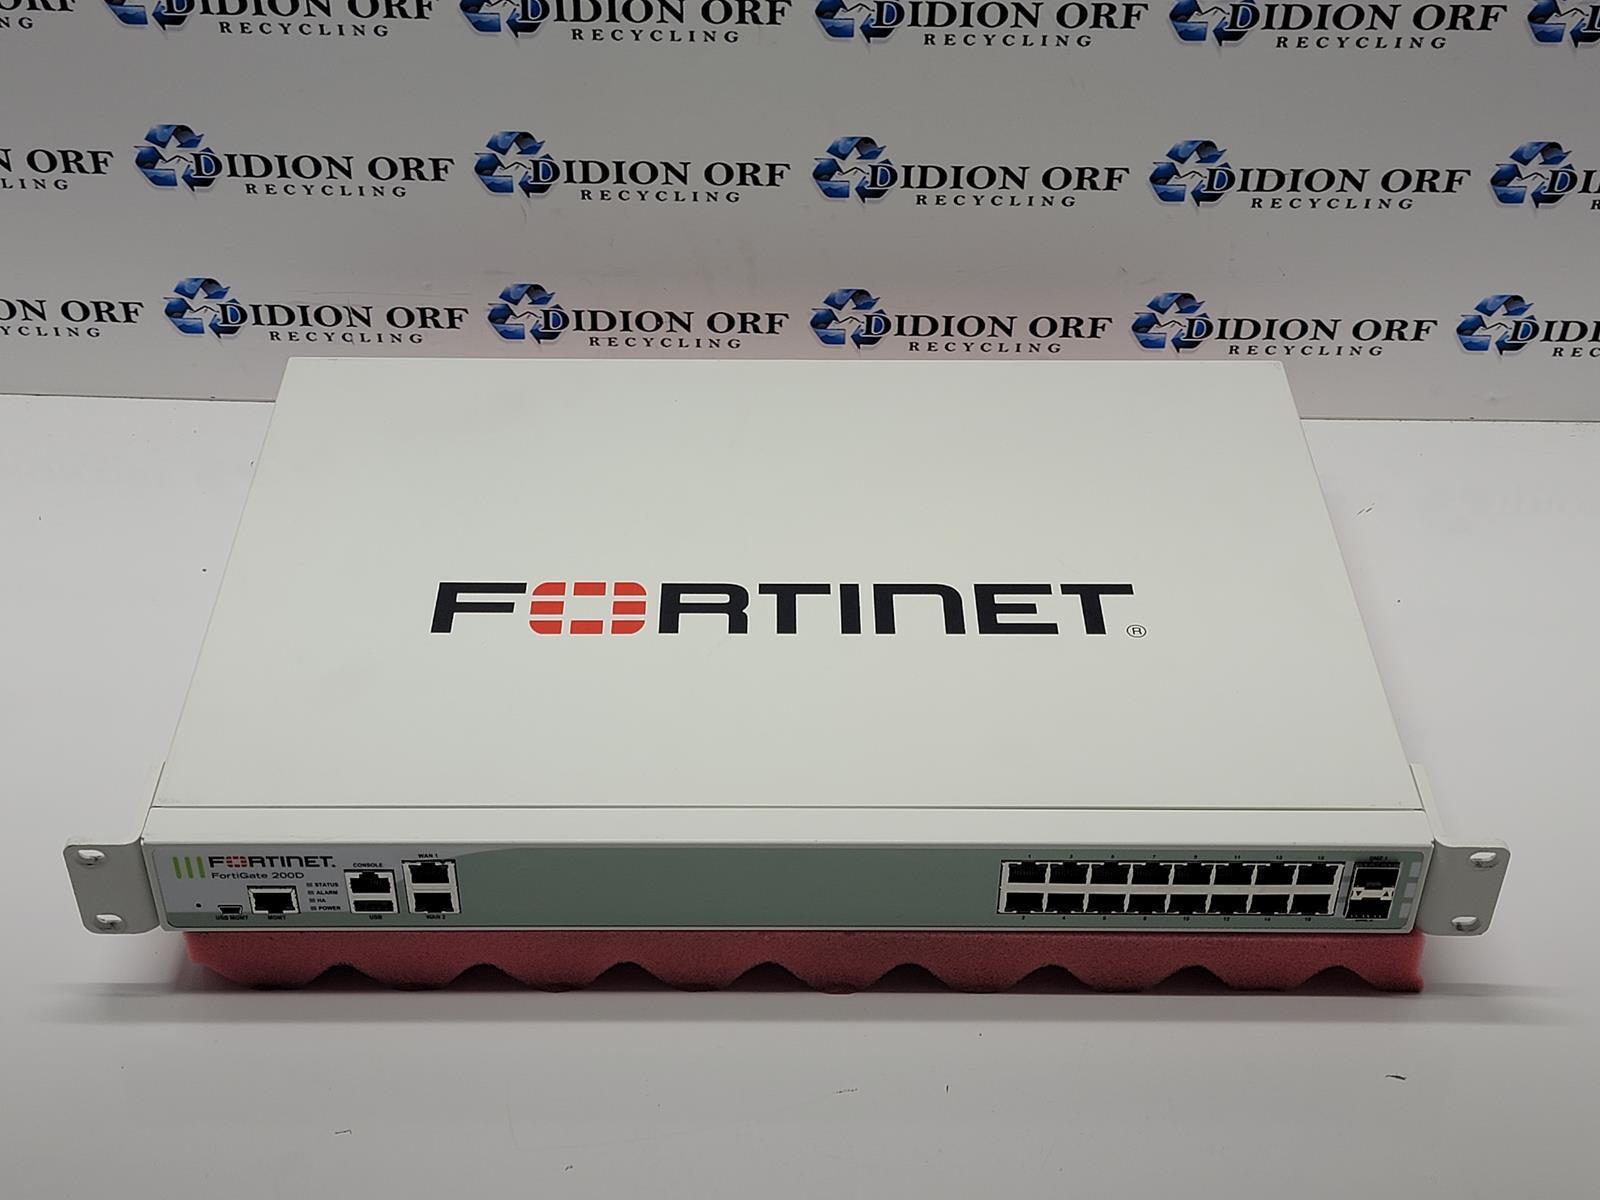 Fortinet FG-200D FortiGate 200D Firewall Security Appliance SKU 7849